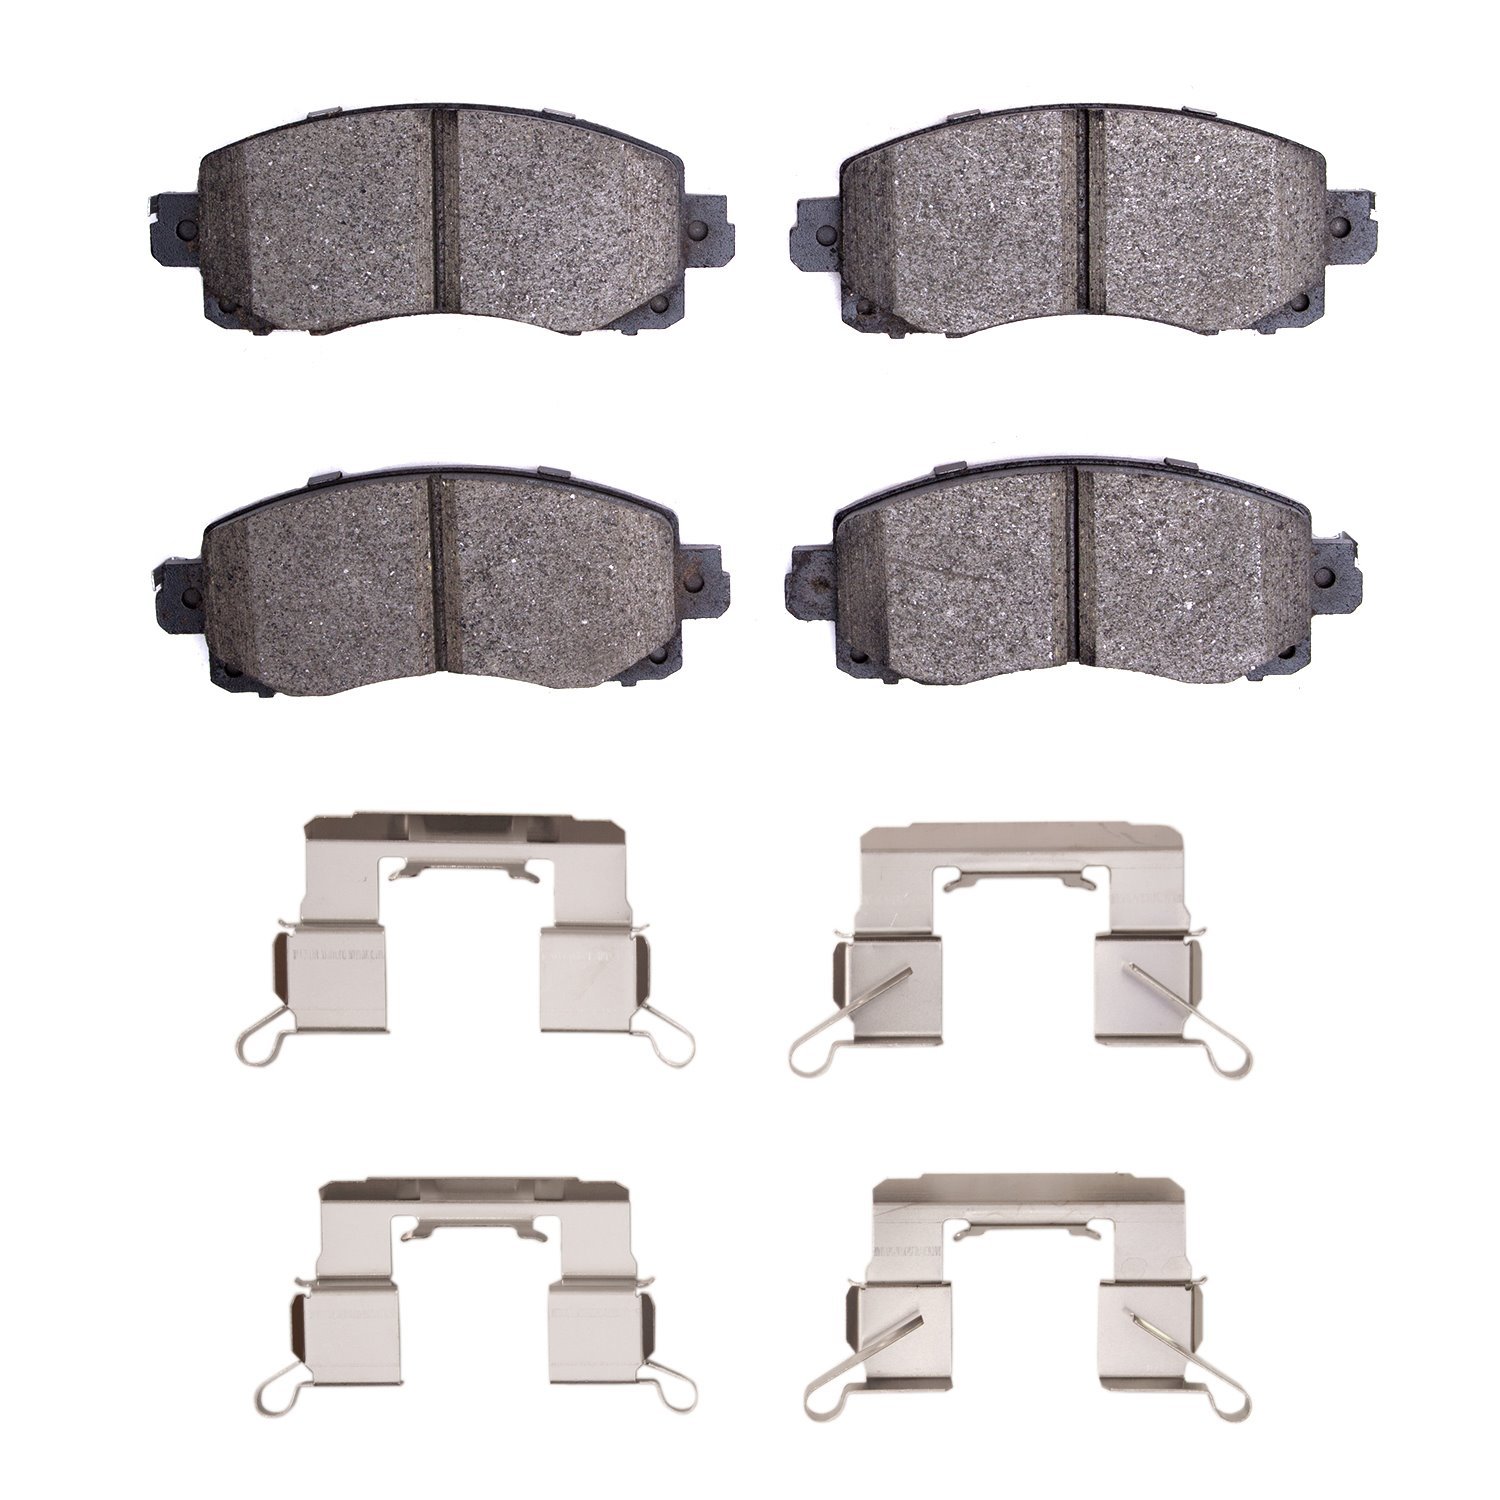 1310-2045-01 3000-Series Ceramic Brake Pads & Hardware Kit, Fits Select Subaru, Position: Front